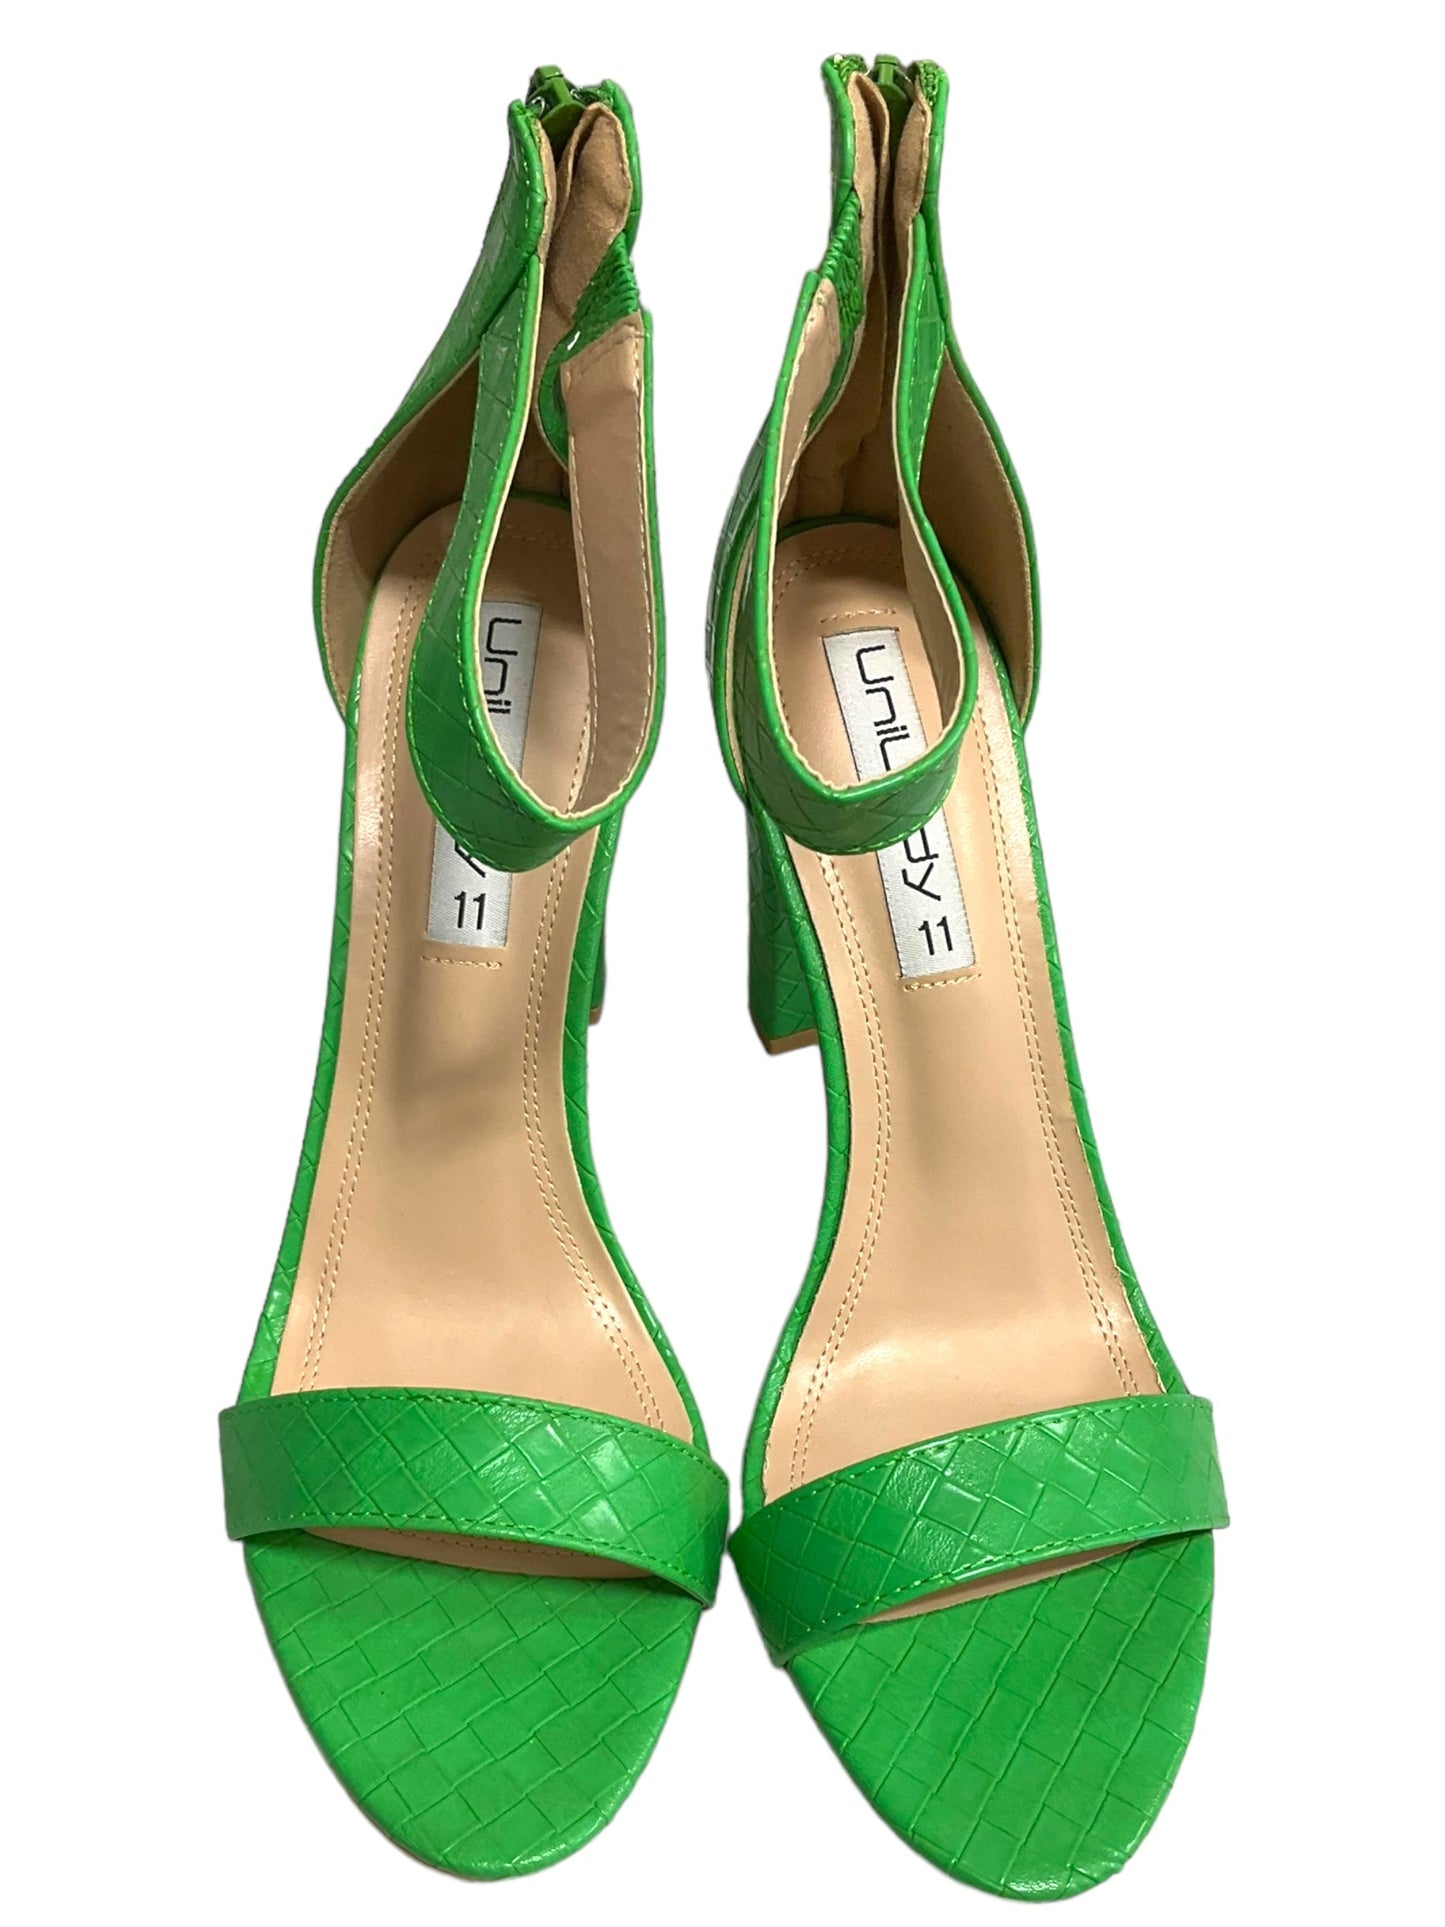 Green Shoes Heels Block Clothes Mentor, Size 11